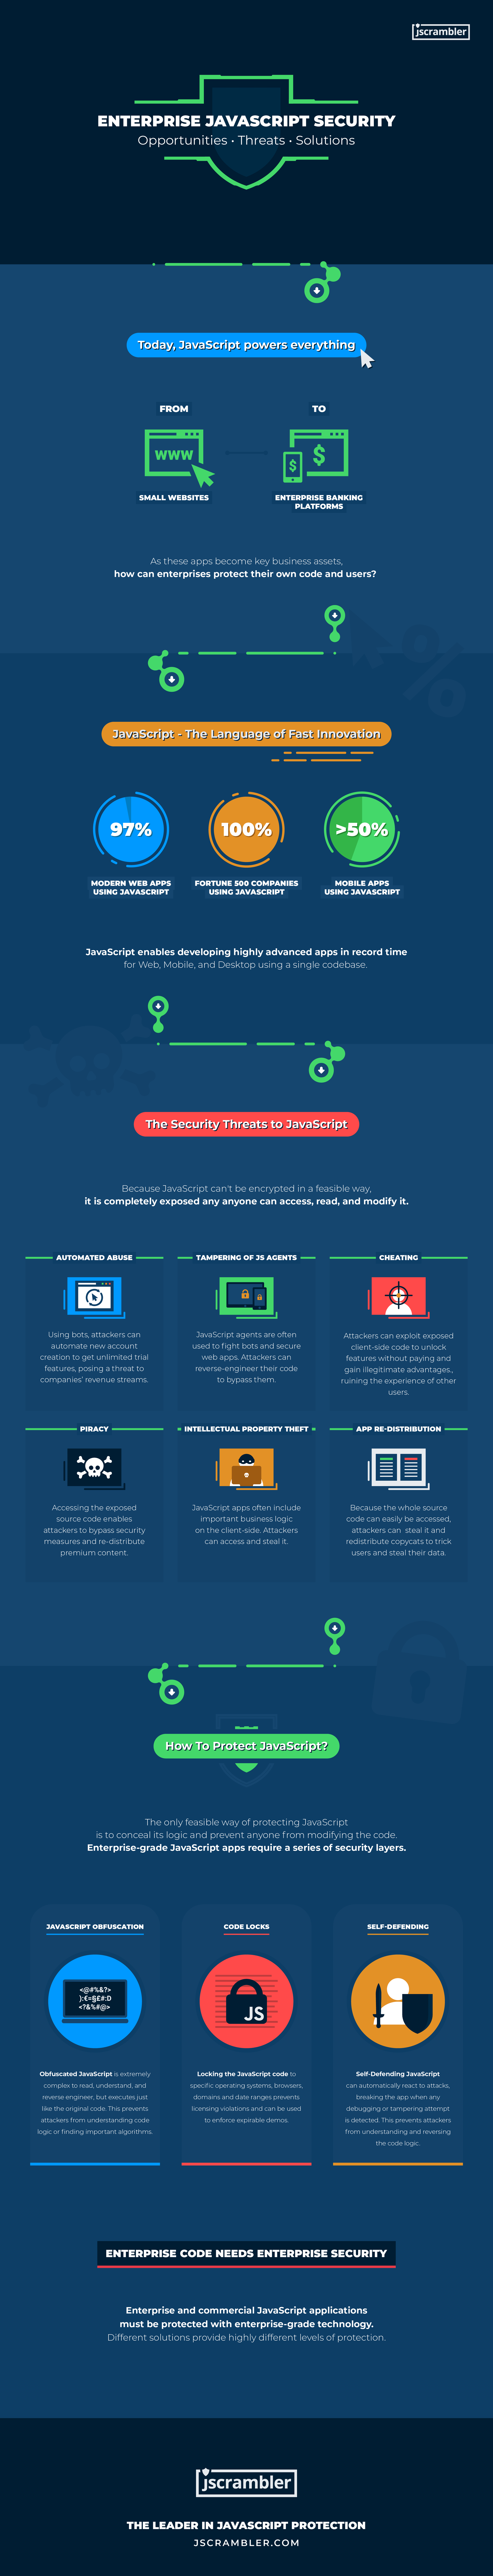 Enterprise-JavaScript-Security-infographic